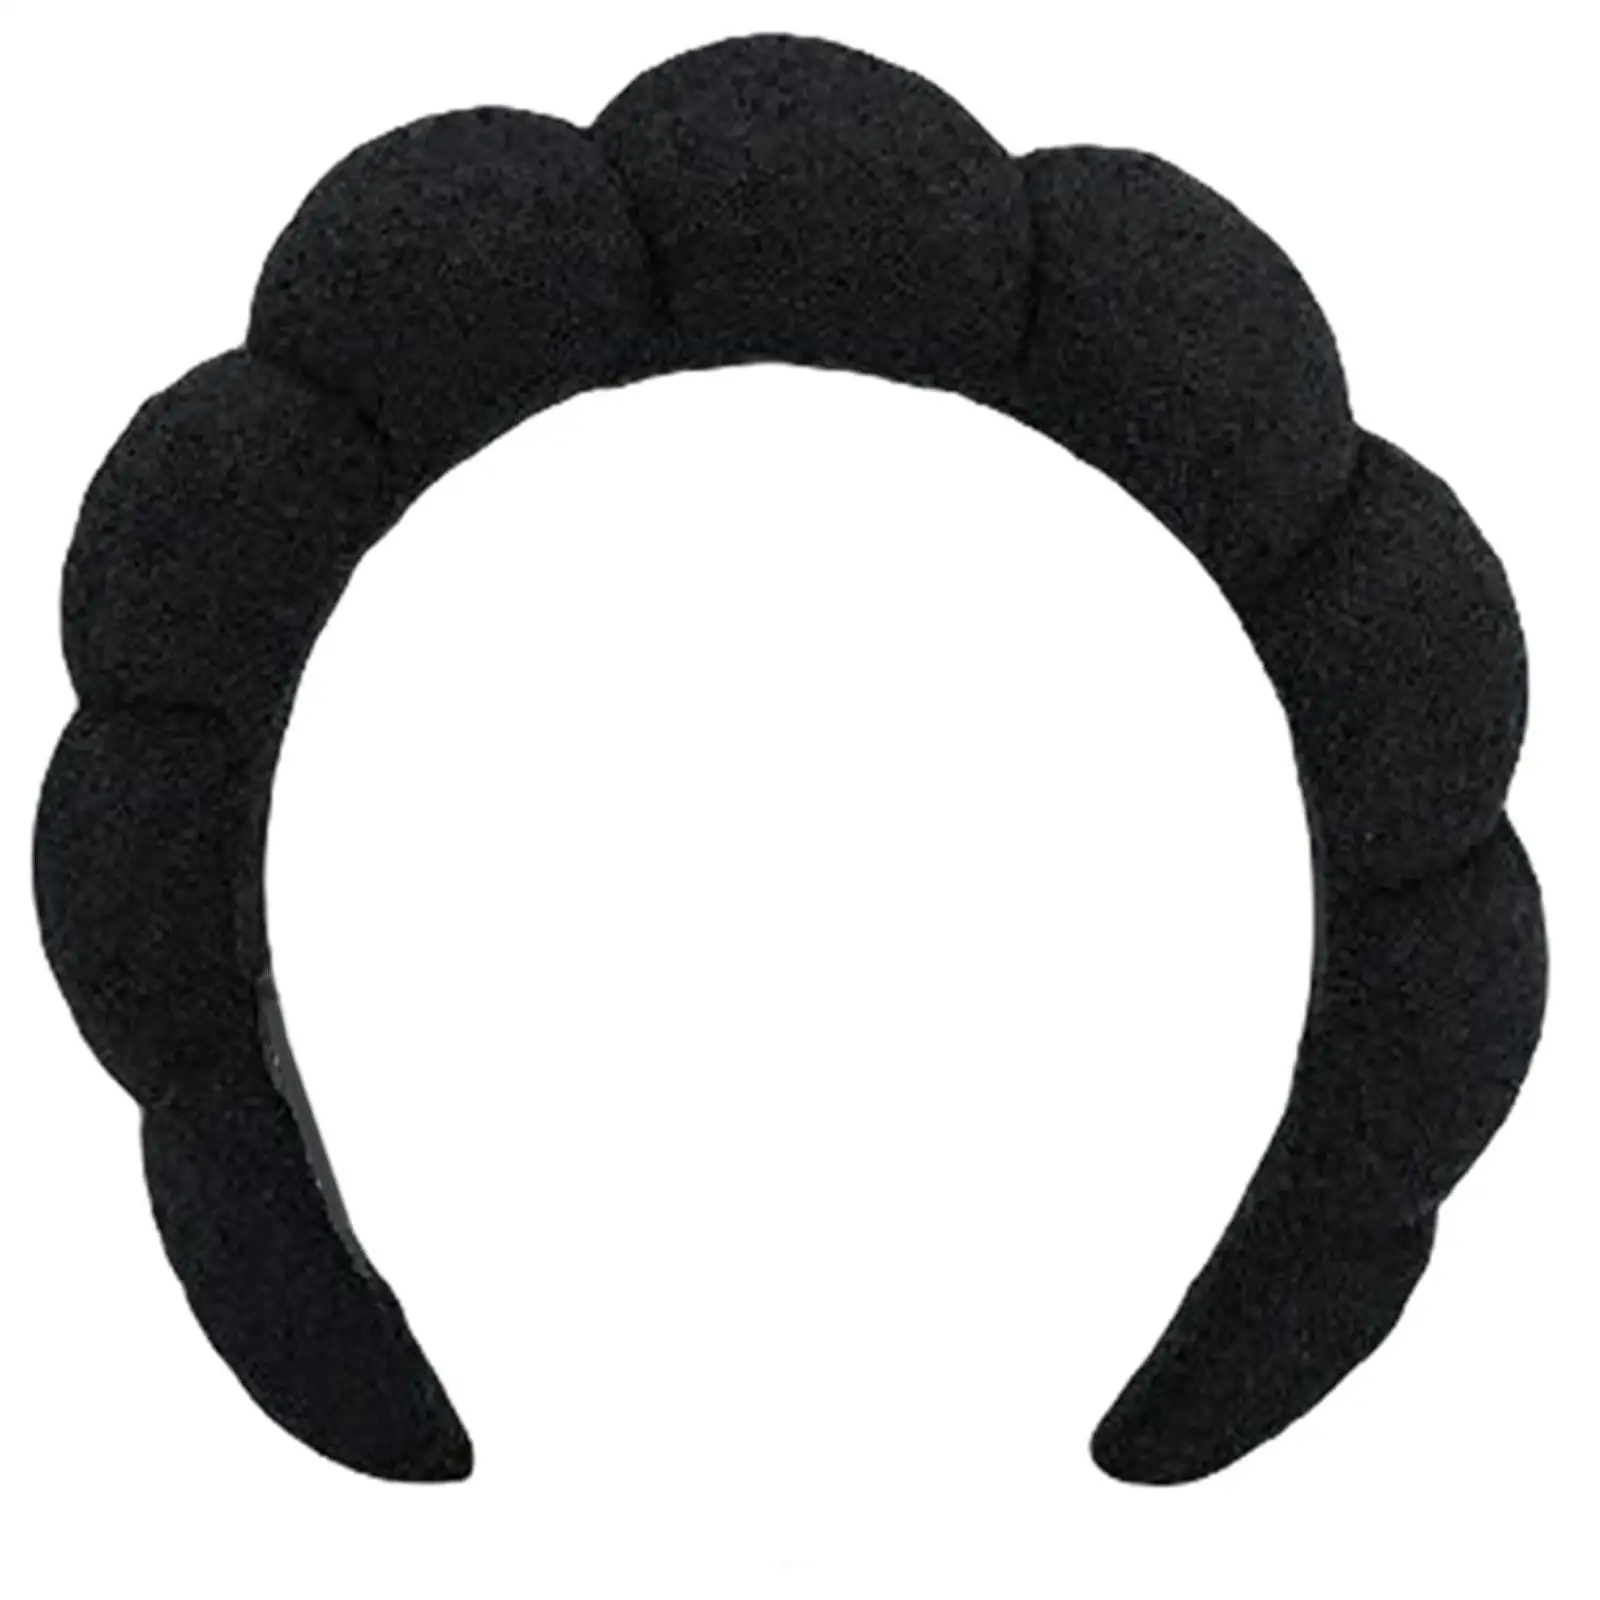 Sponge Headband Hairband Cute Headwear Hair Accessory for Skincare SPA Bath Daily Wear